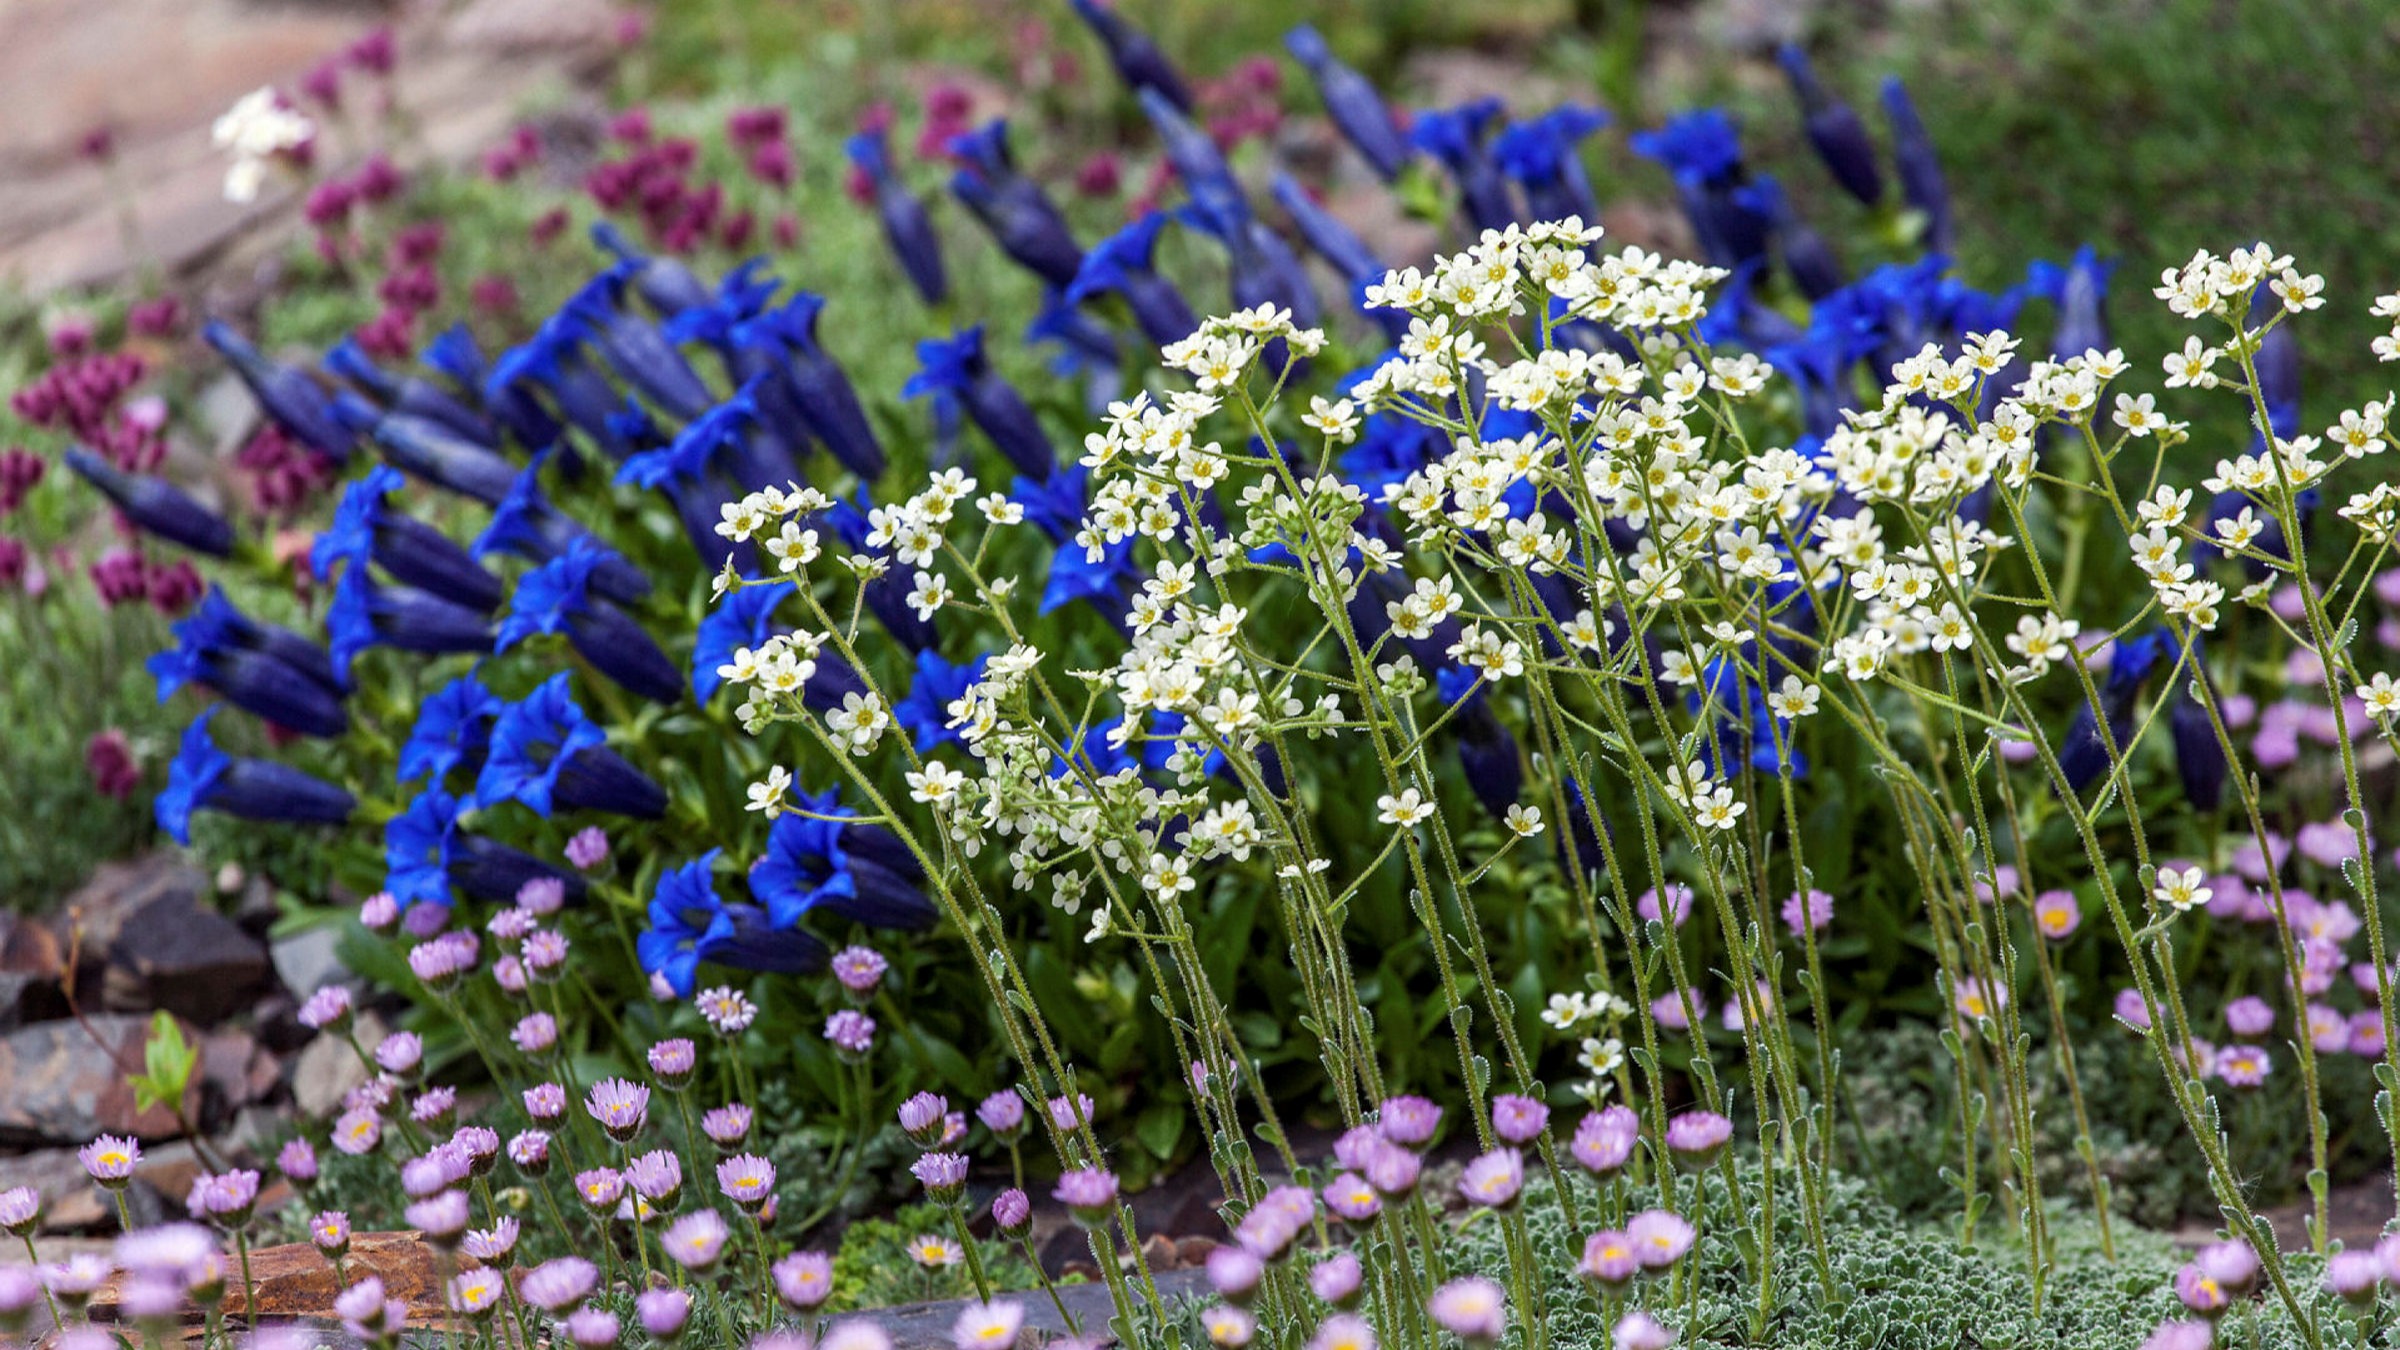 100x Lavender Flowers Seeds 8 Types Plant Beautiful Garden Alpine Hill Landscape 